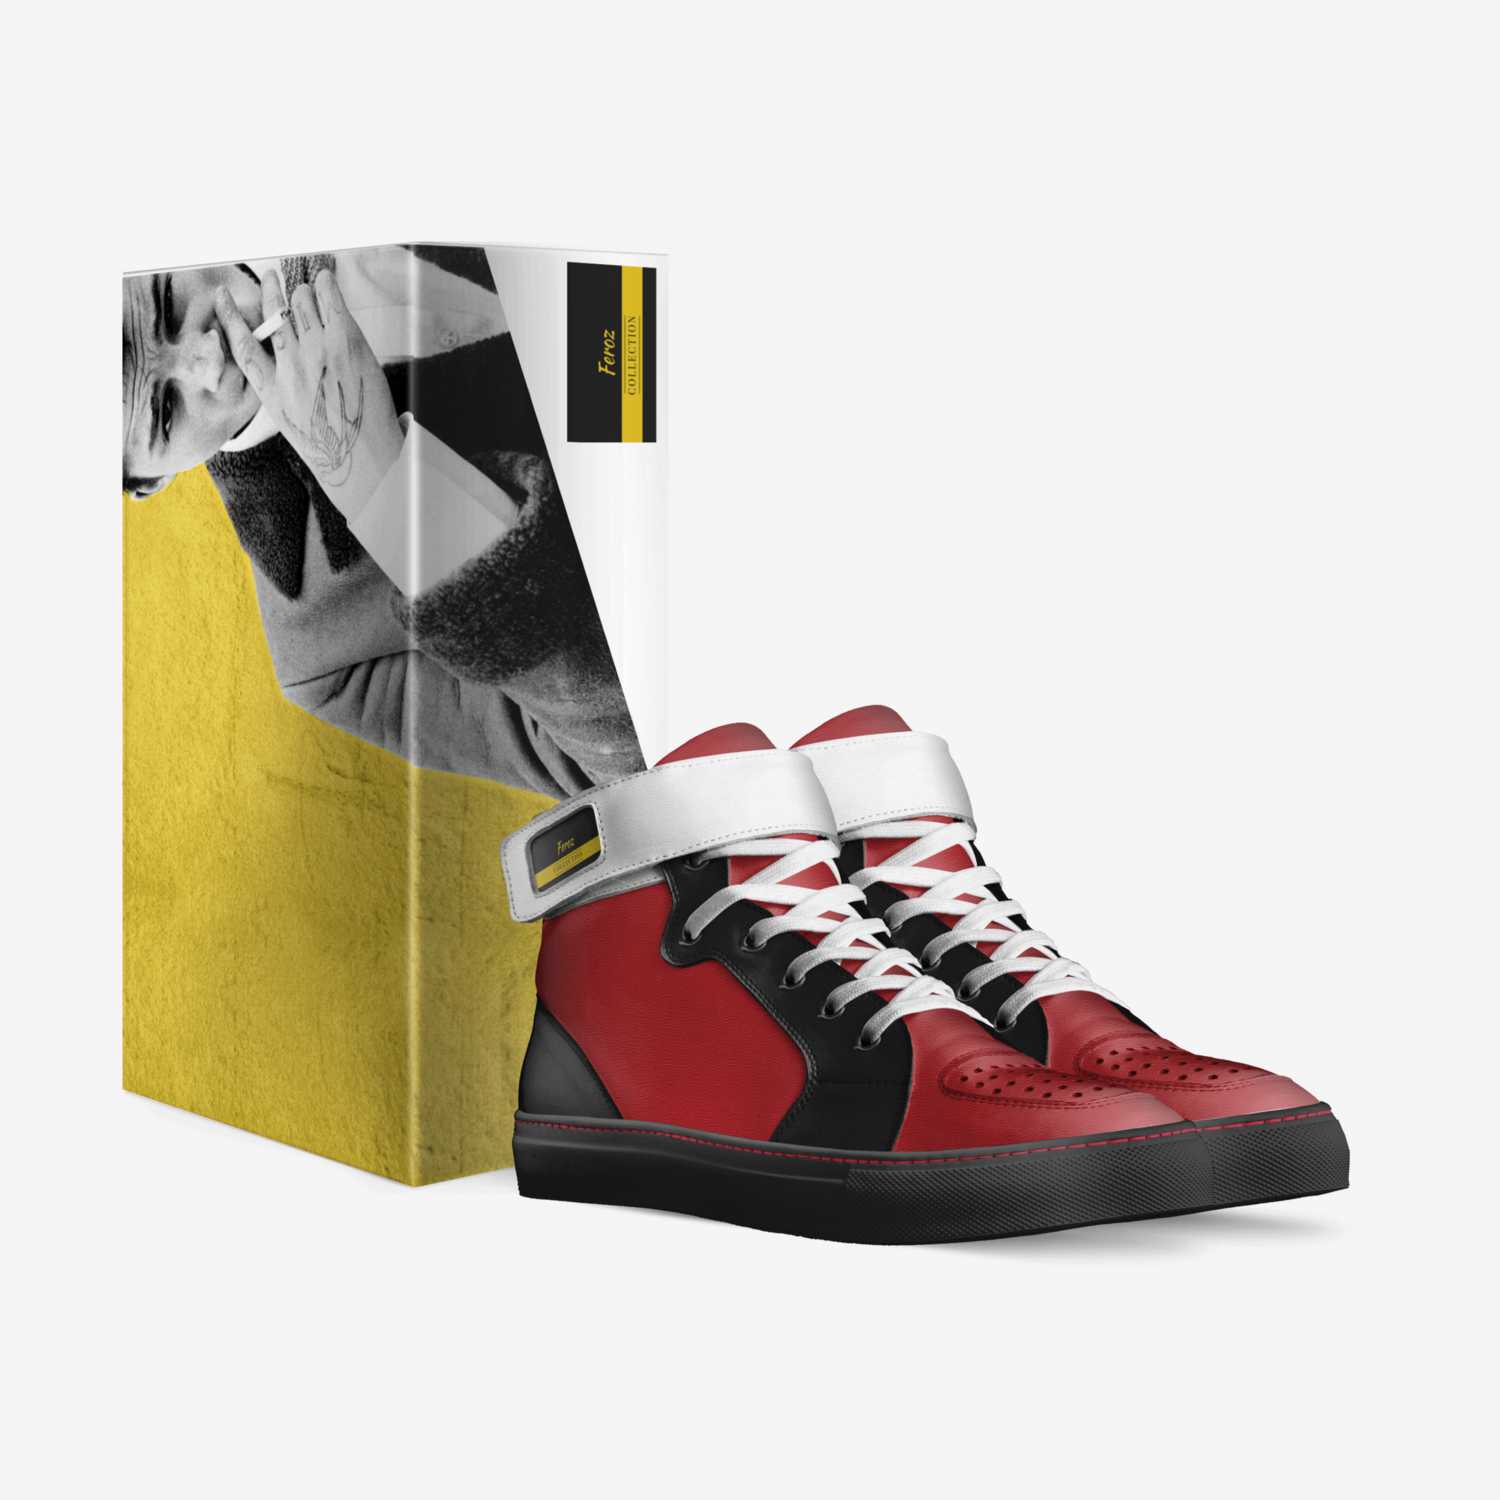 Feroz custom made in Italy shoes by Kae Twan Strow | Box view